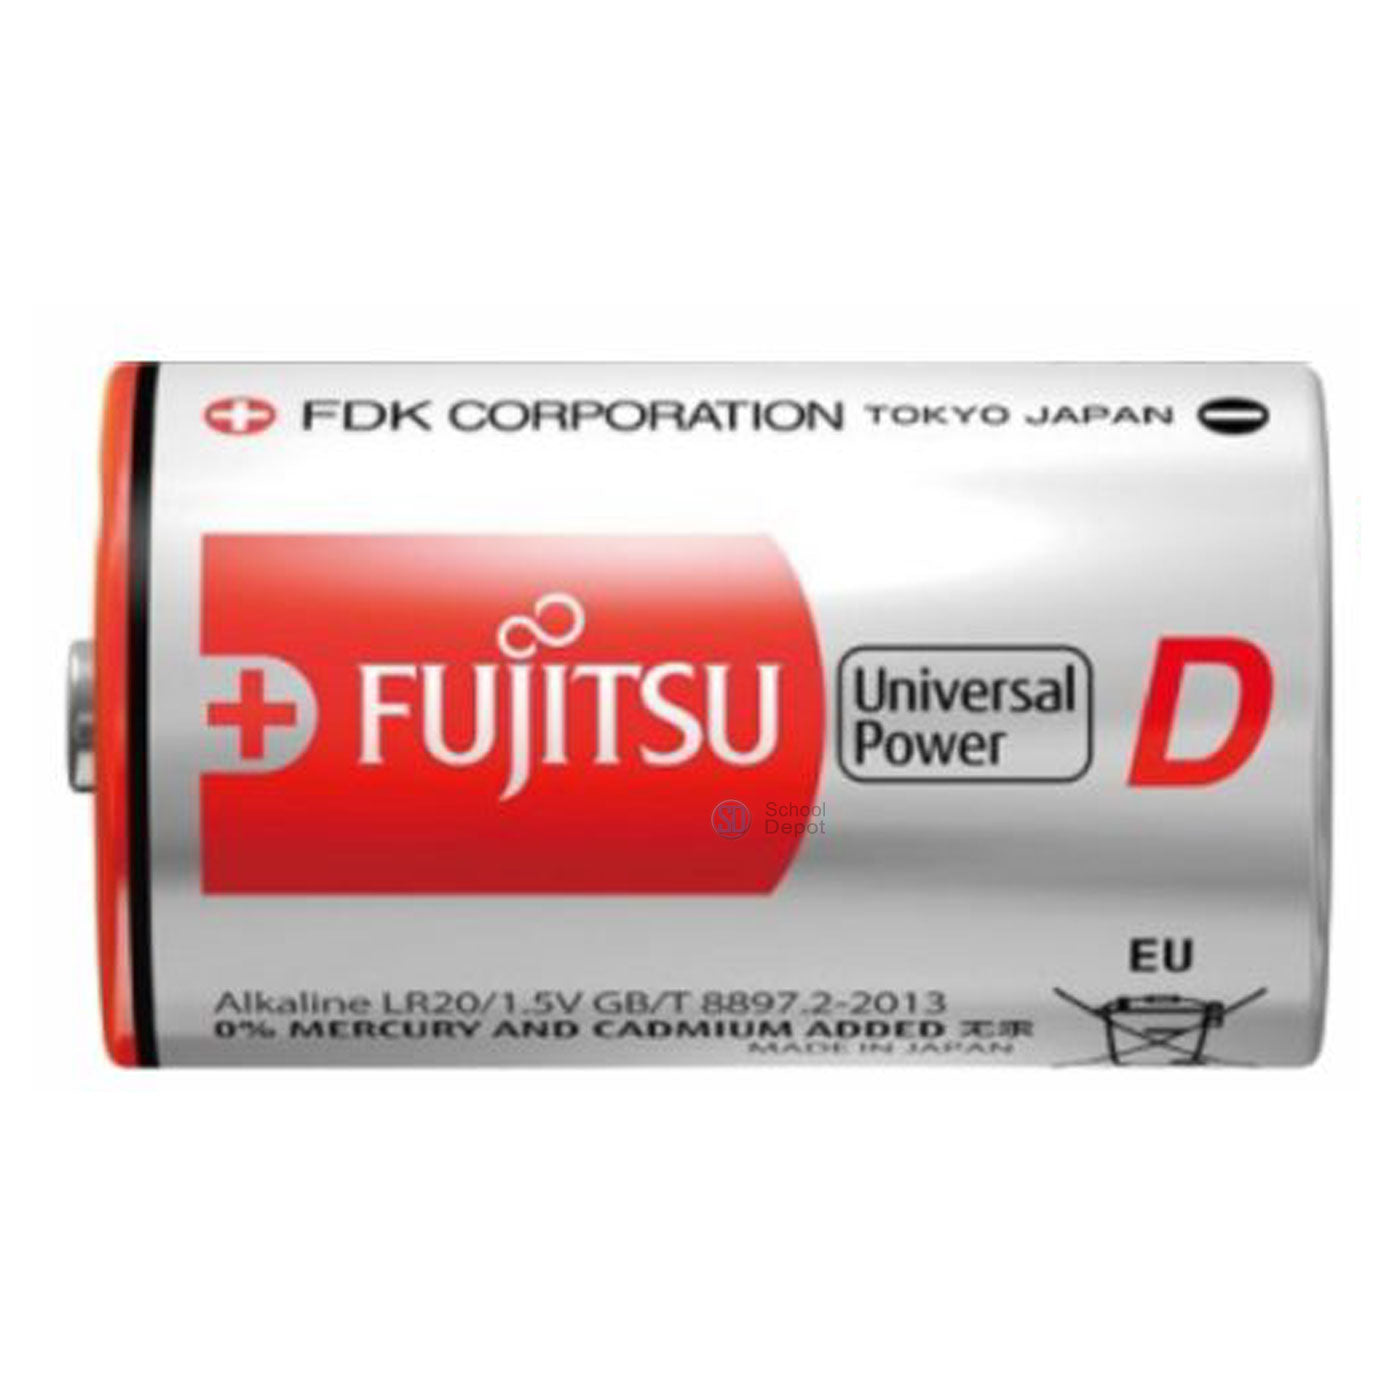 Fujitsu Batteries D Universal Power Alkaline [1.5 Volt]